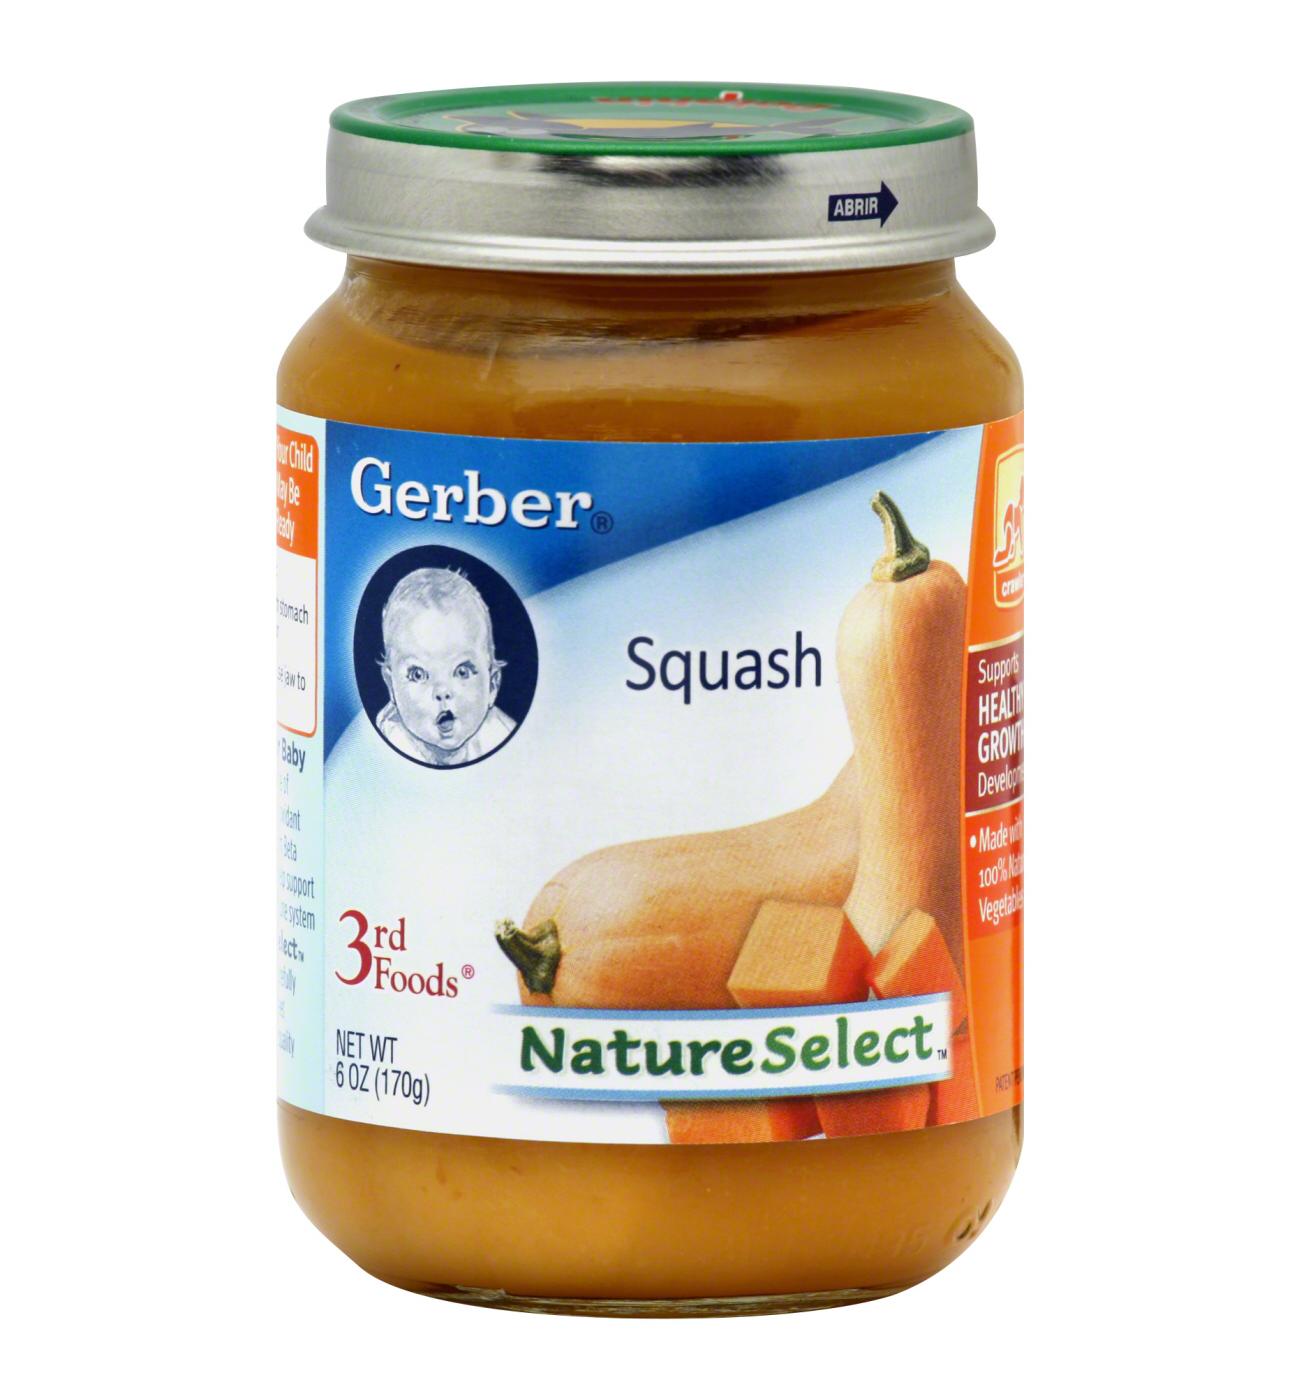 Gerber 3rd Foods - Squash; image 2 of 2